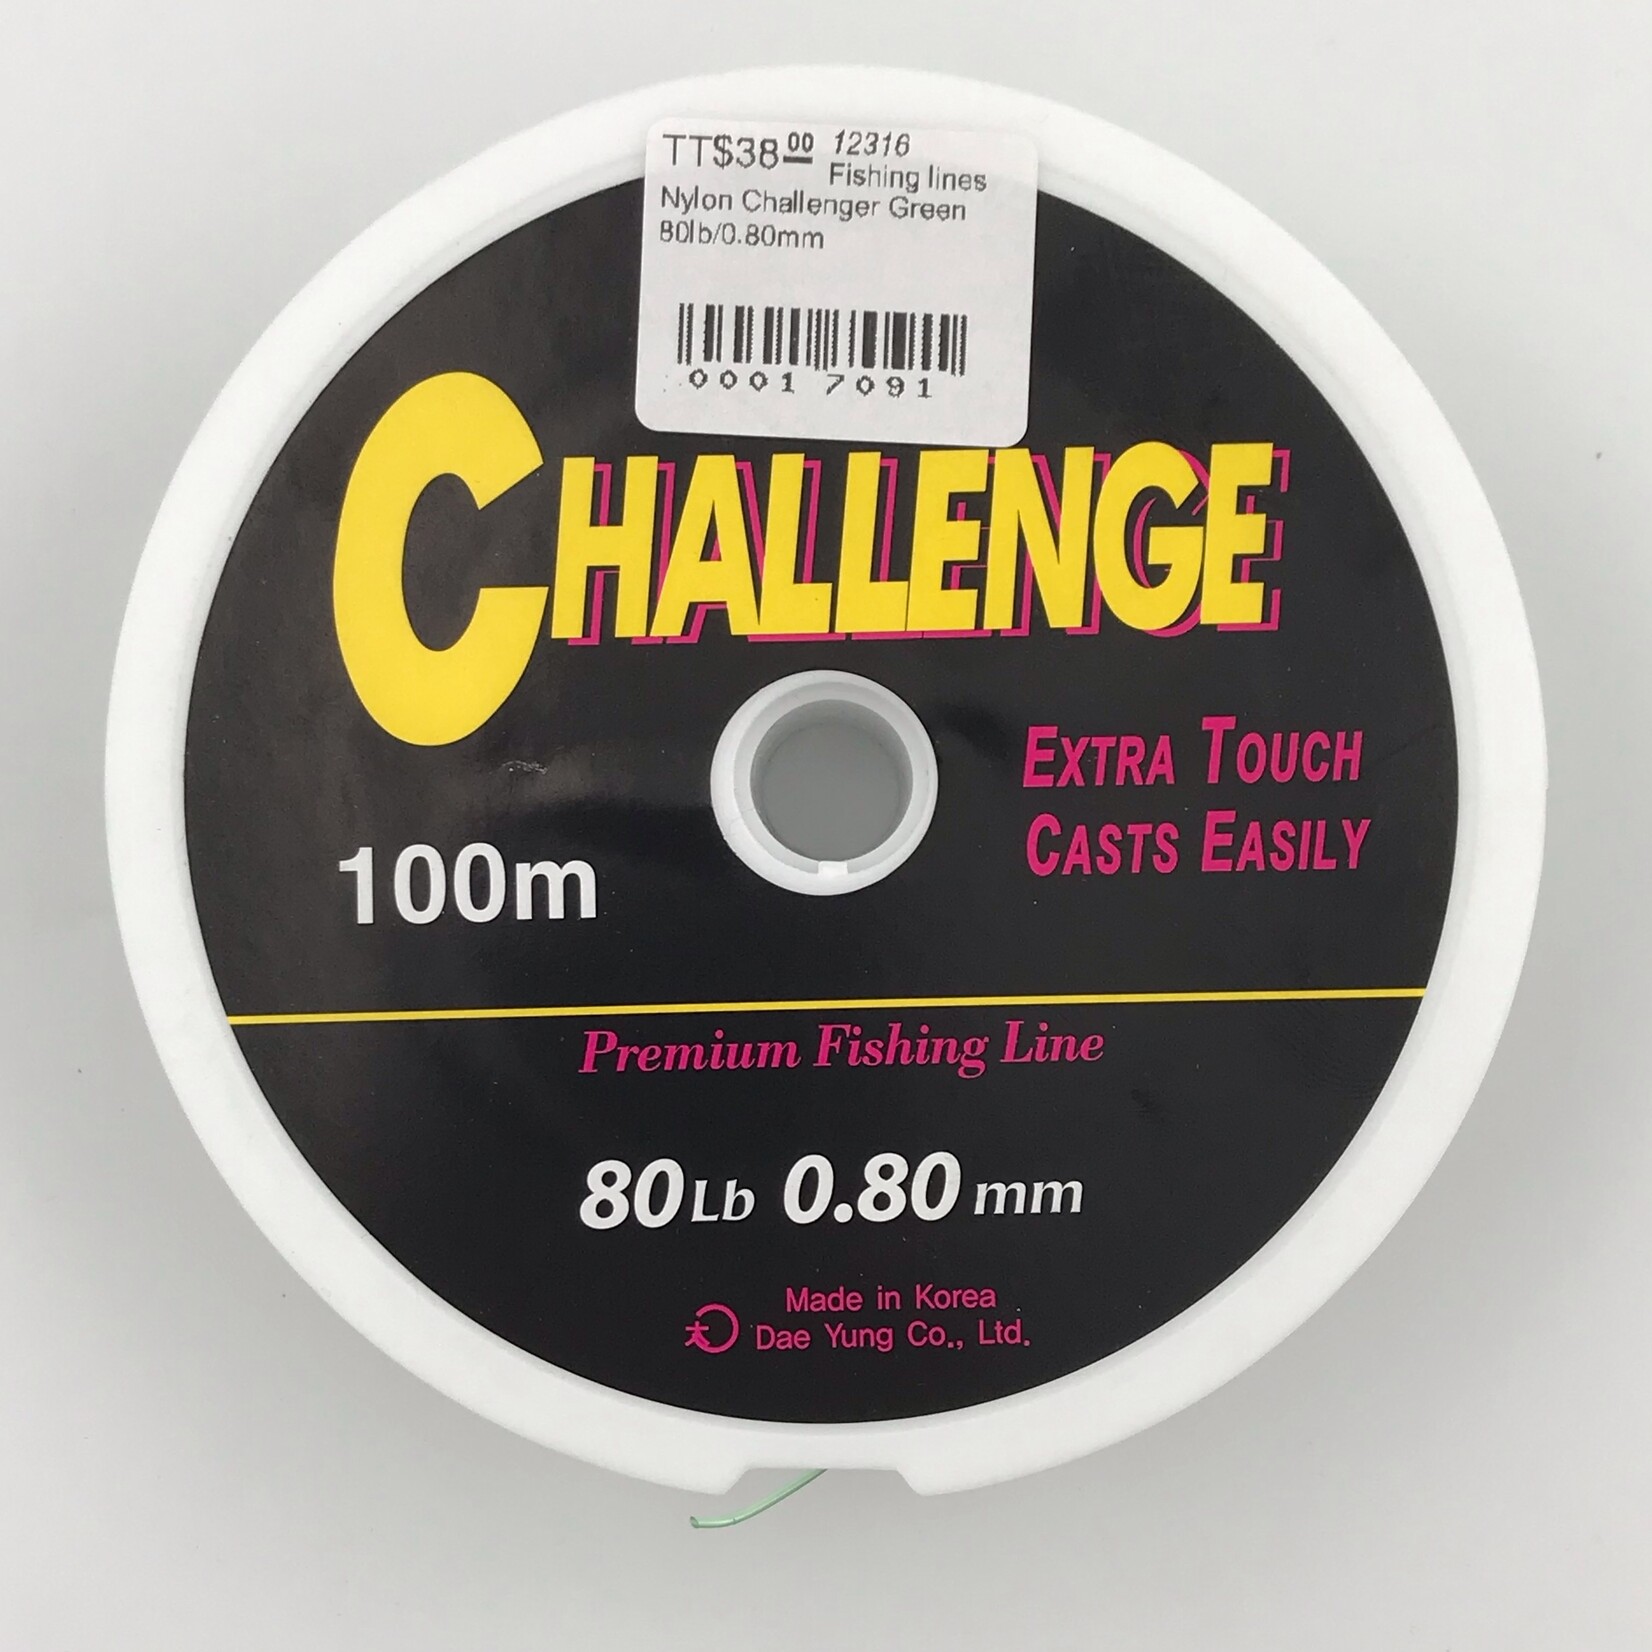 Fishing lines Nylon Challenger Green 80lb/0.80mm